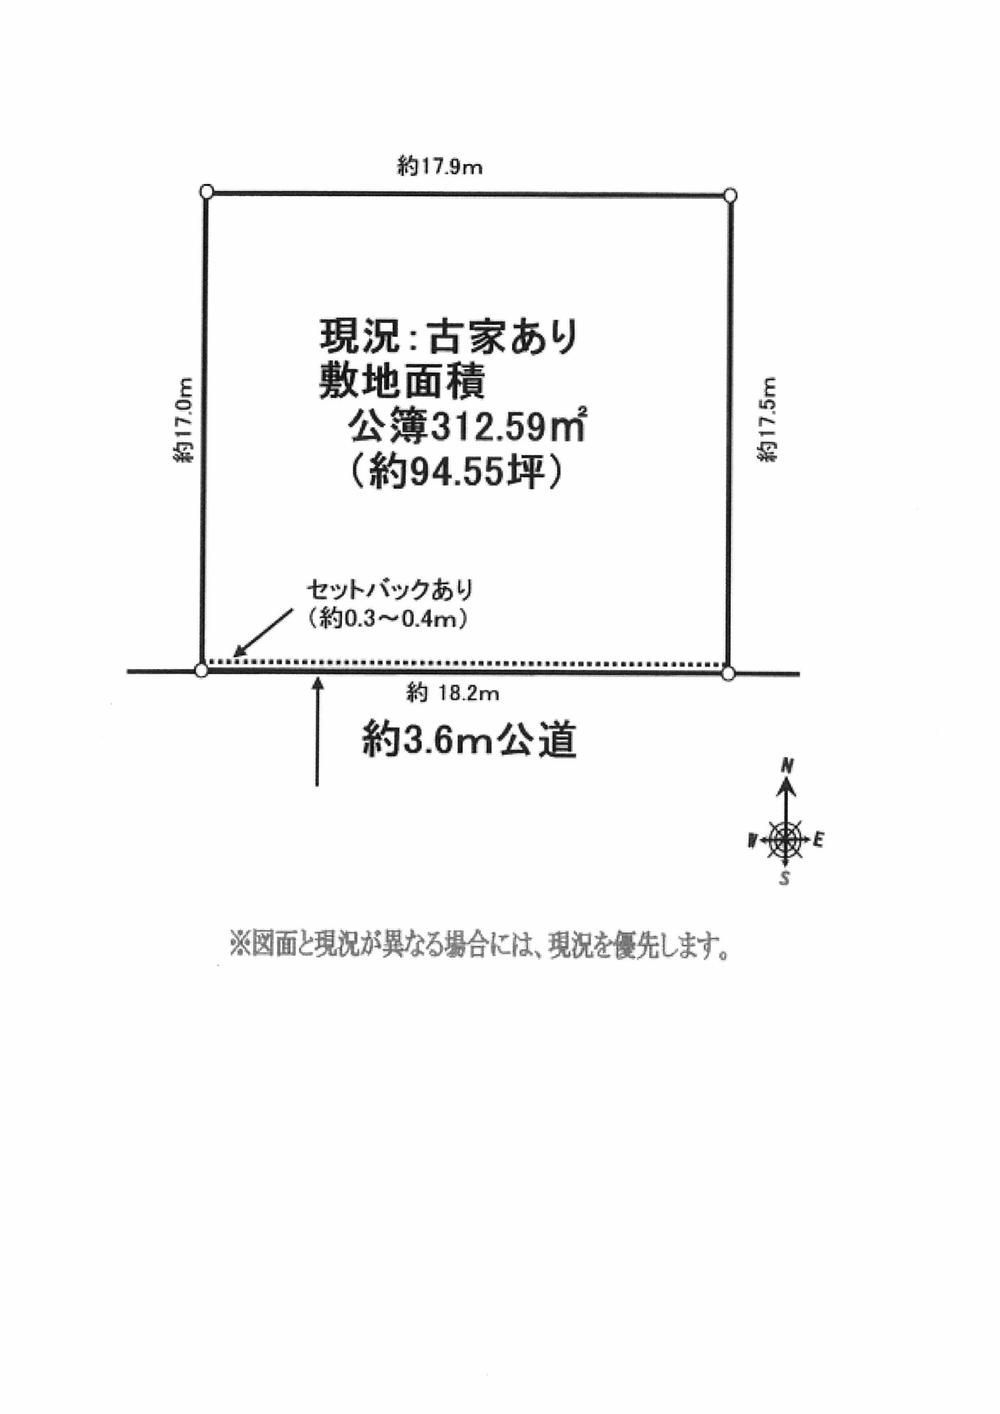 Compartment figure. Land price 175 million yen, Land area 312.59 sq m